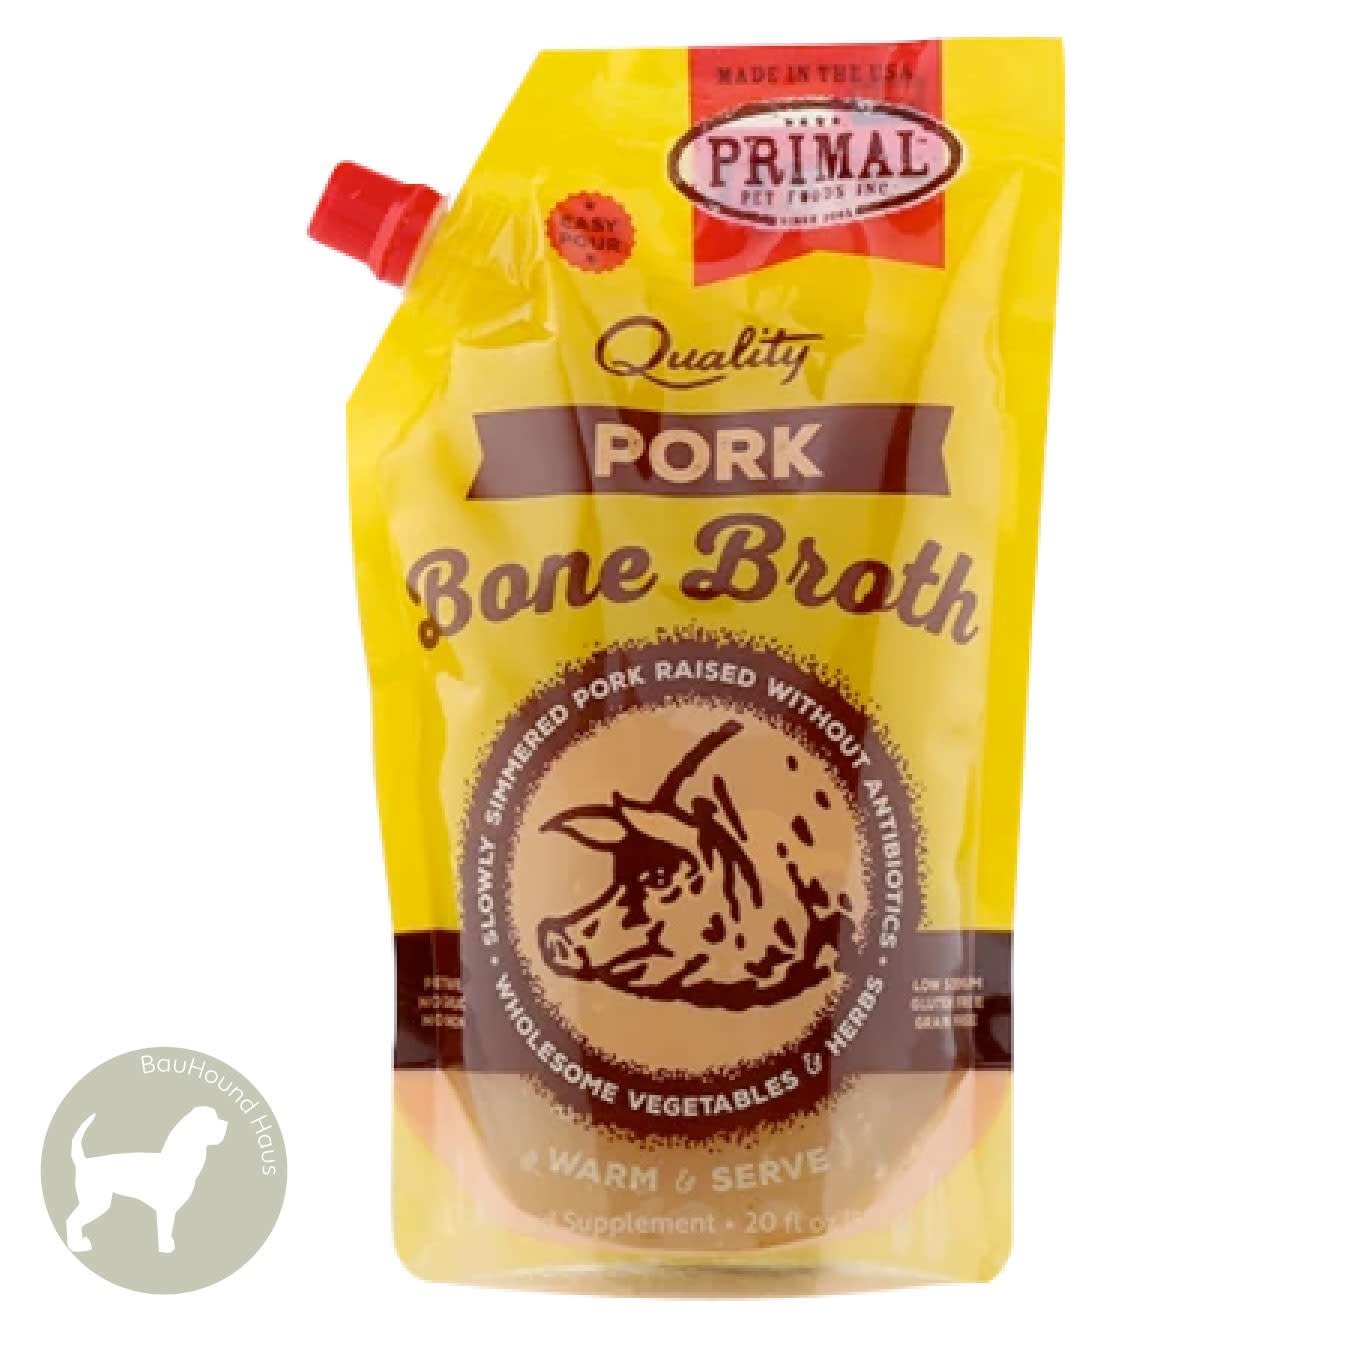 Primal Pet Foods Primal Bone Broth Pork, 591ml